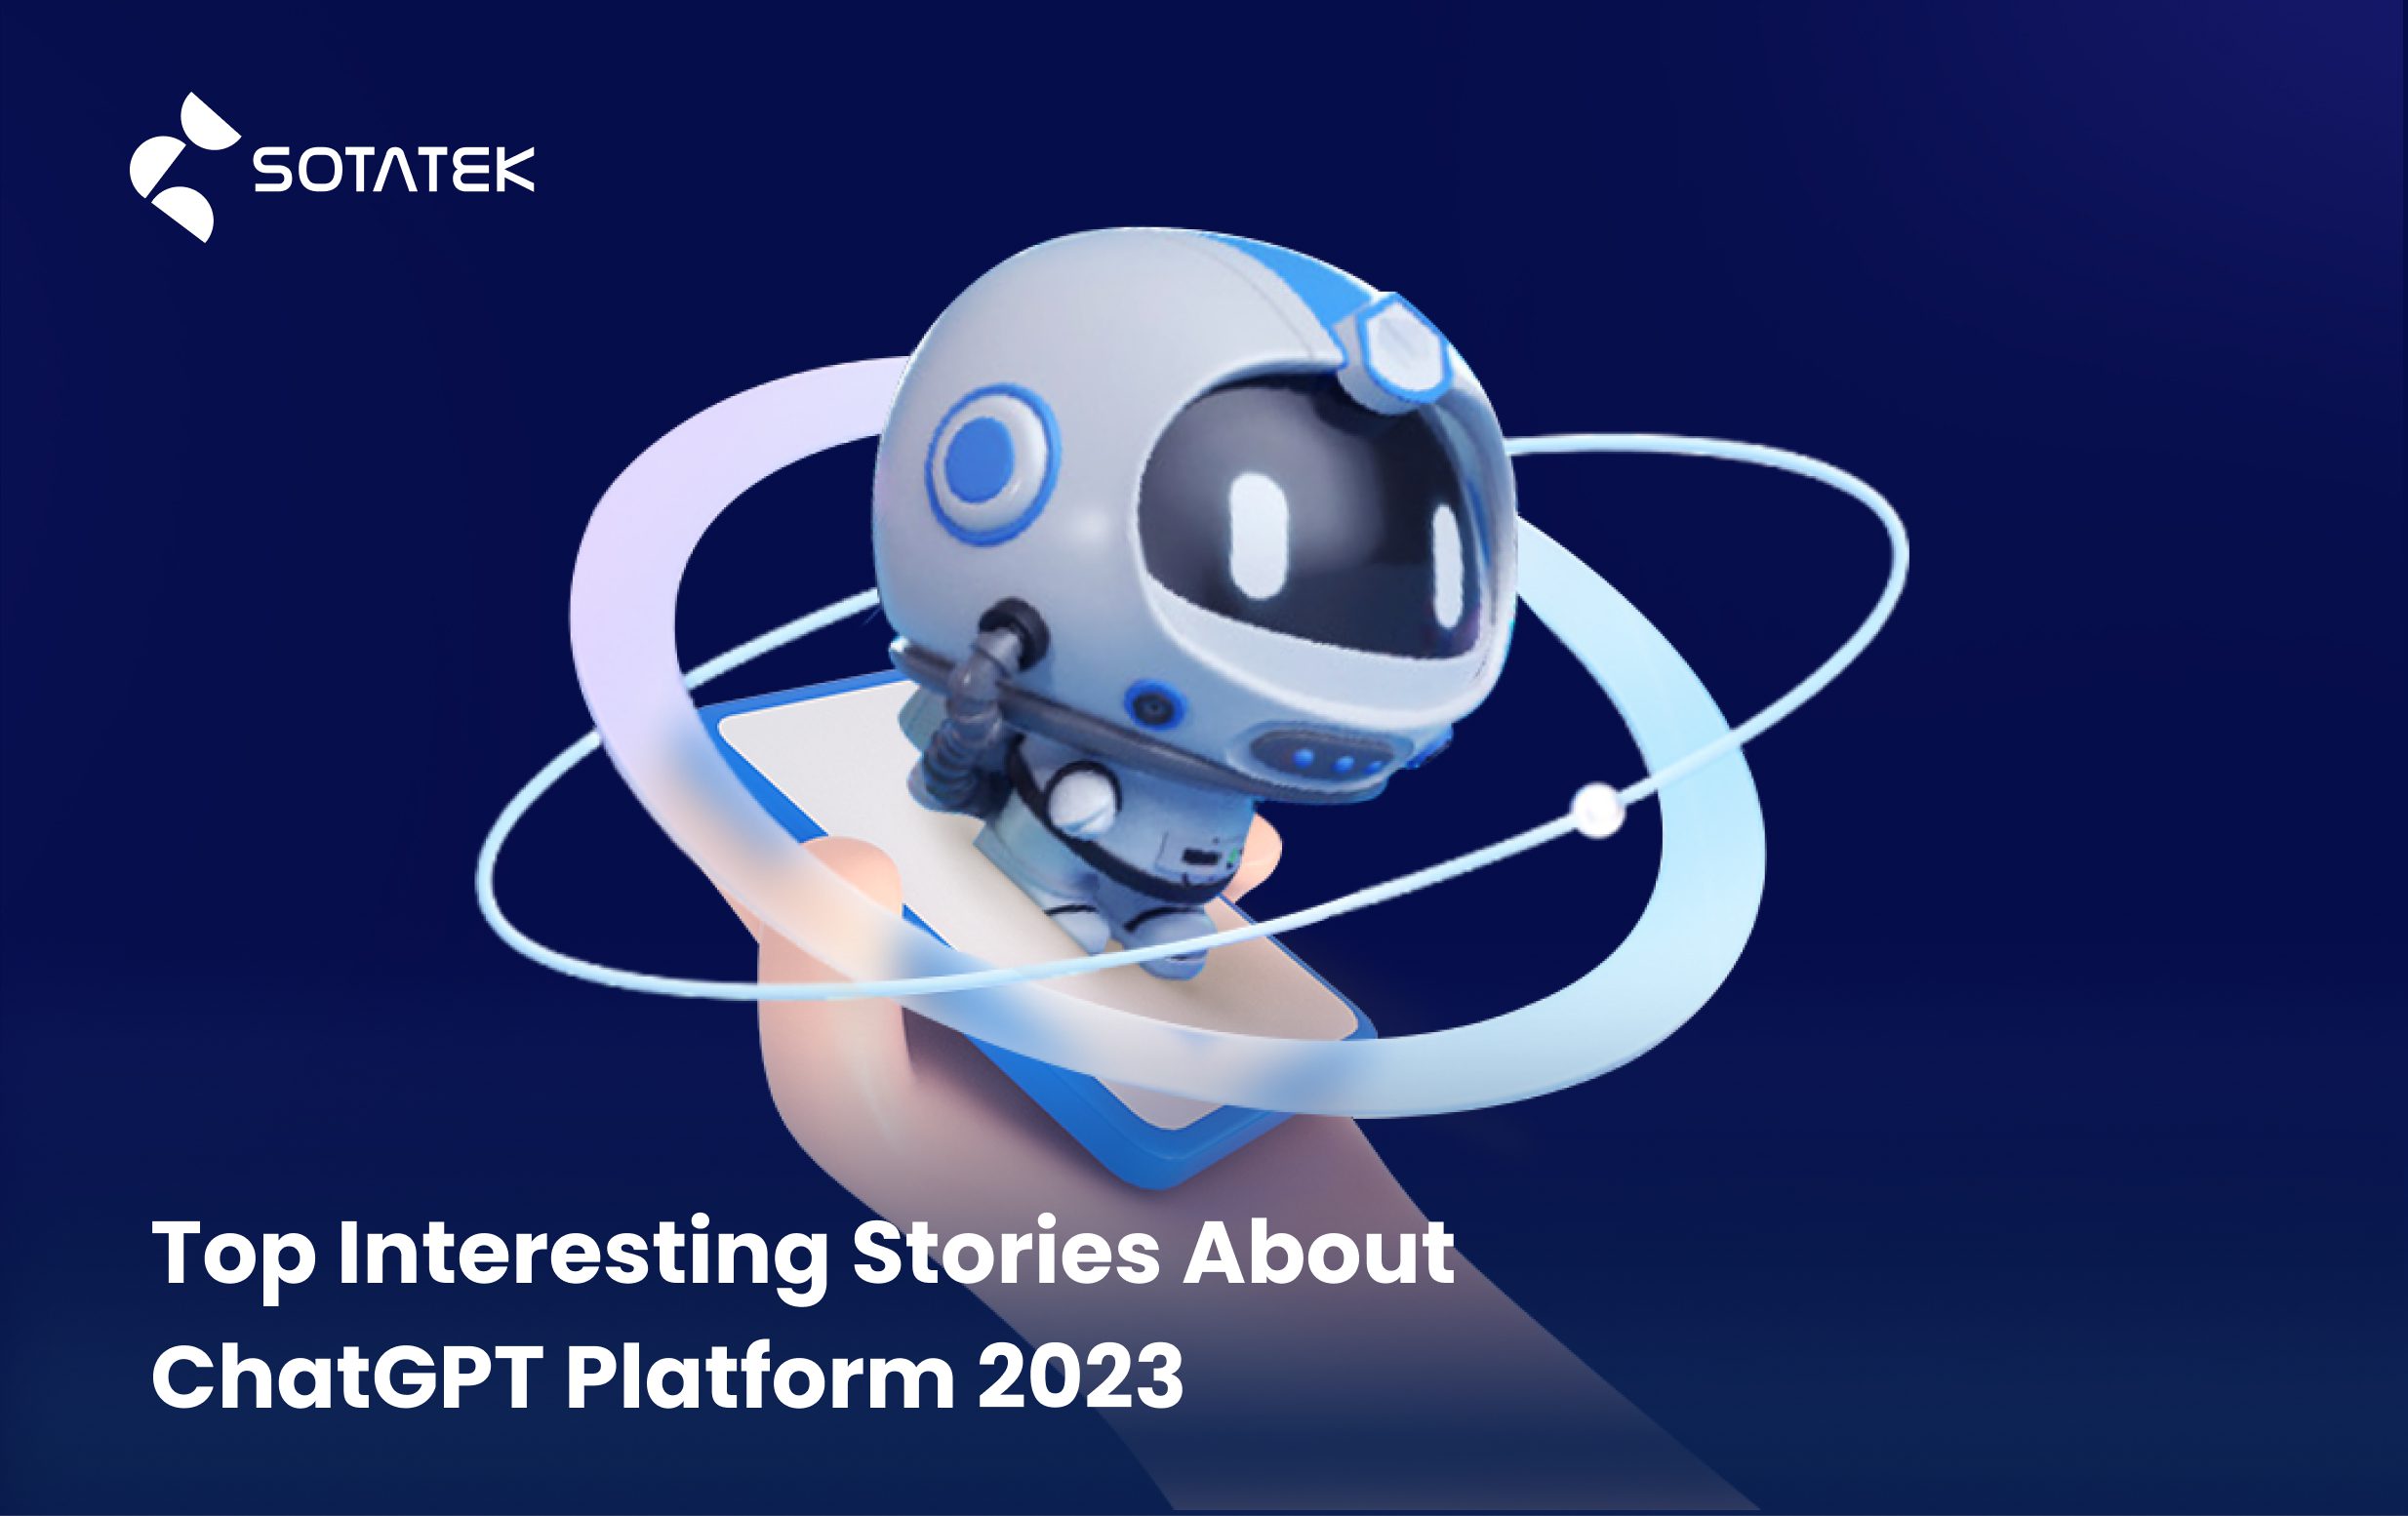 Top Interesting Stories About ChatGPT Platform 2023